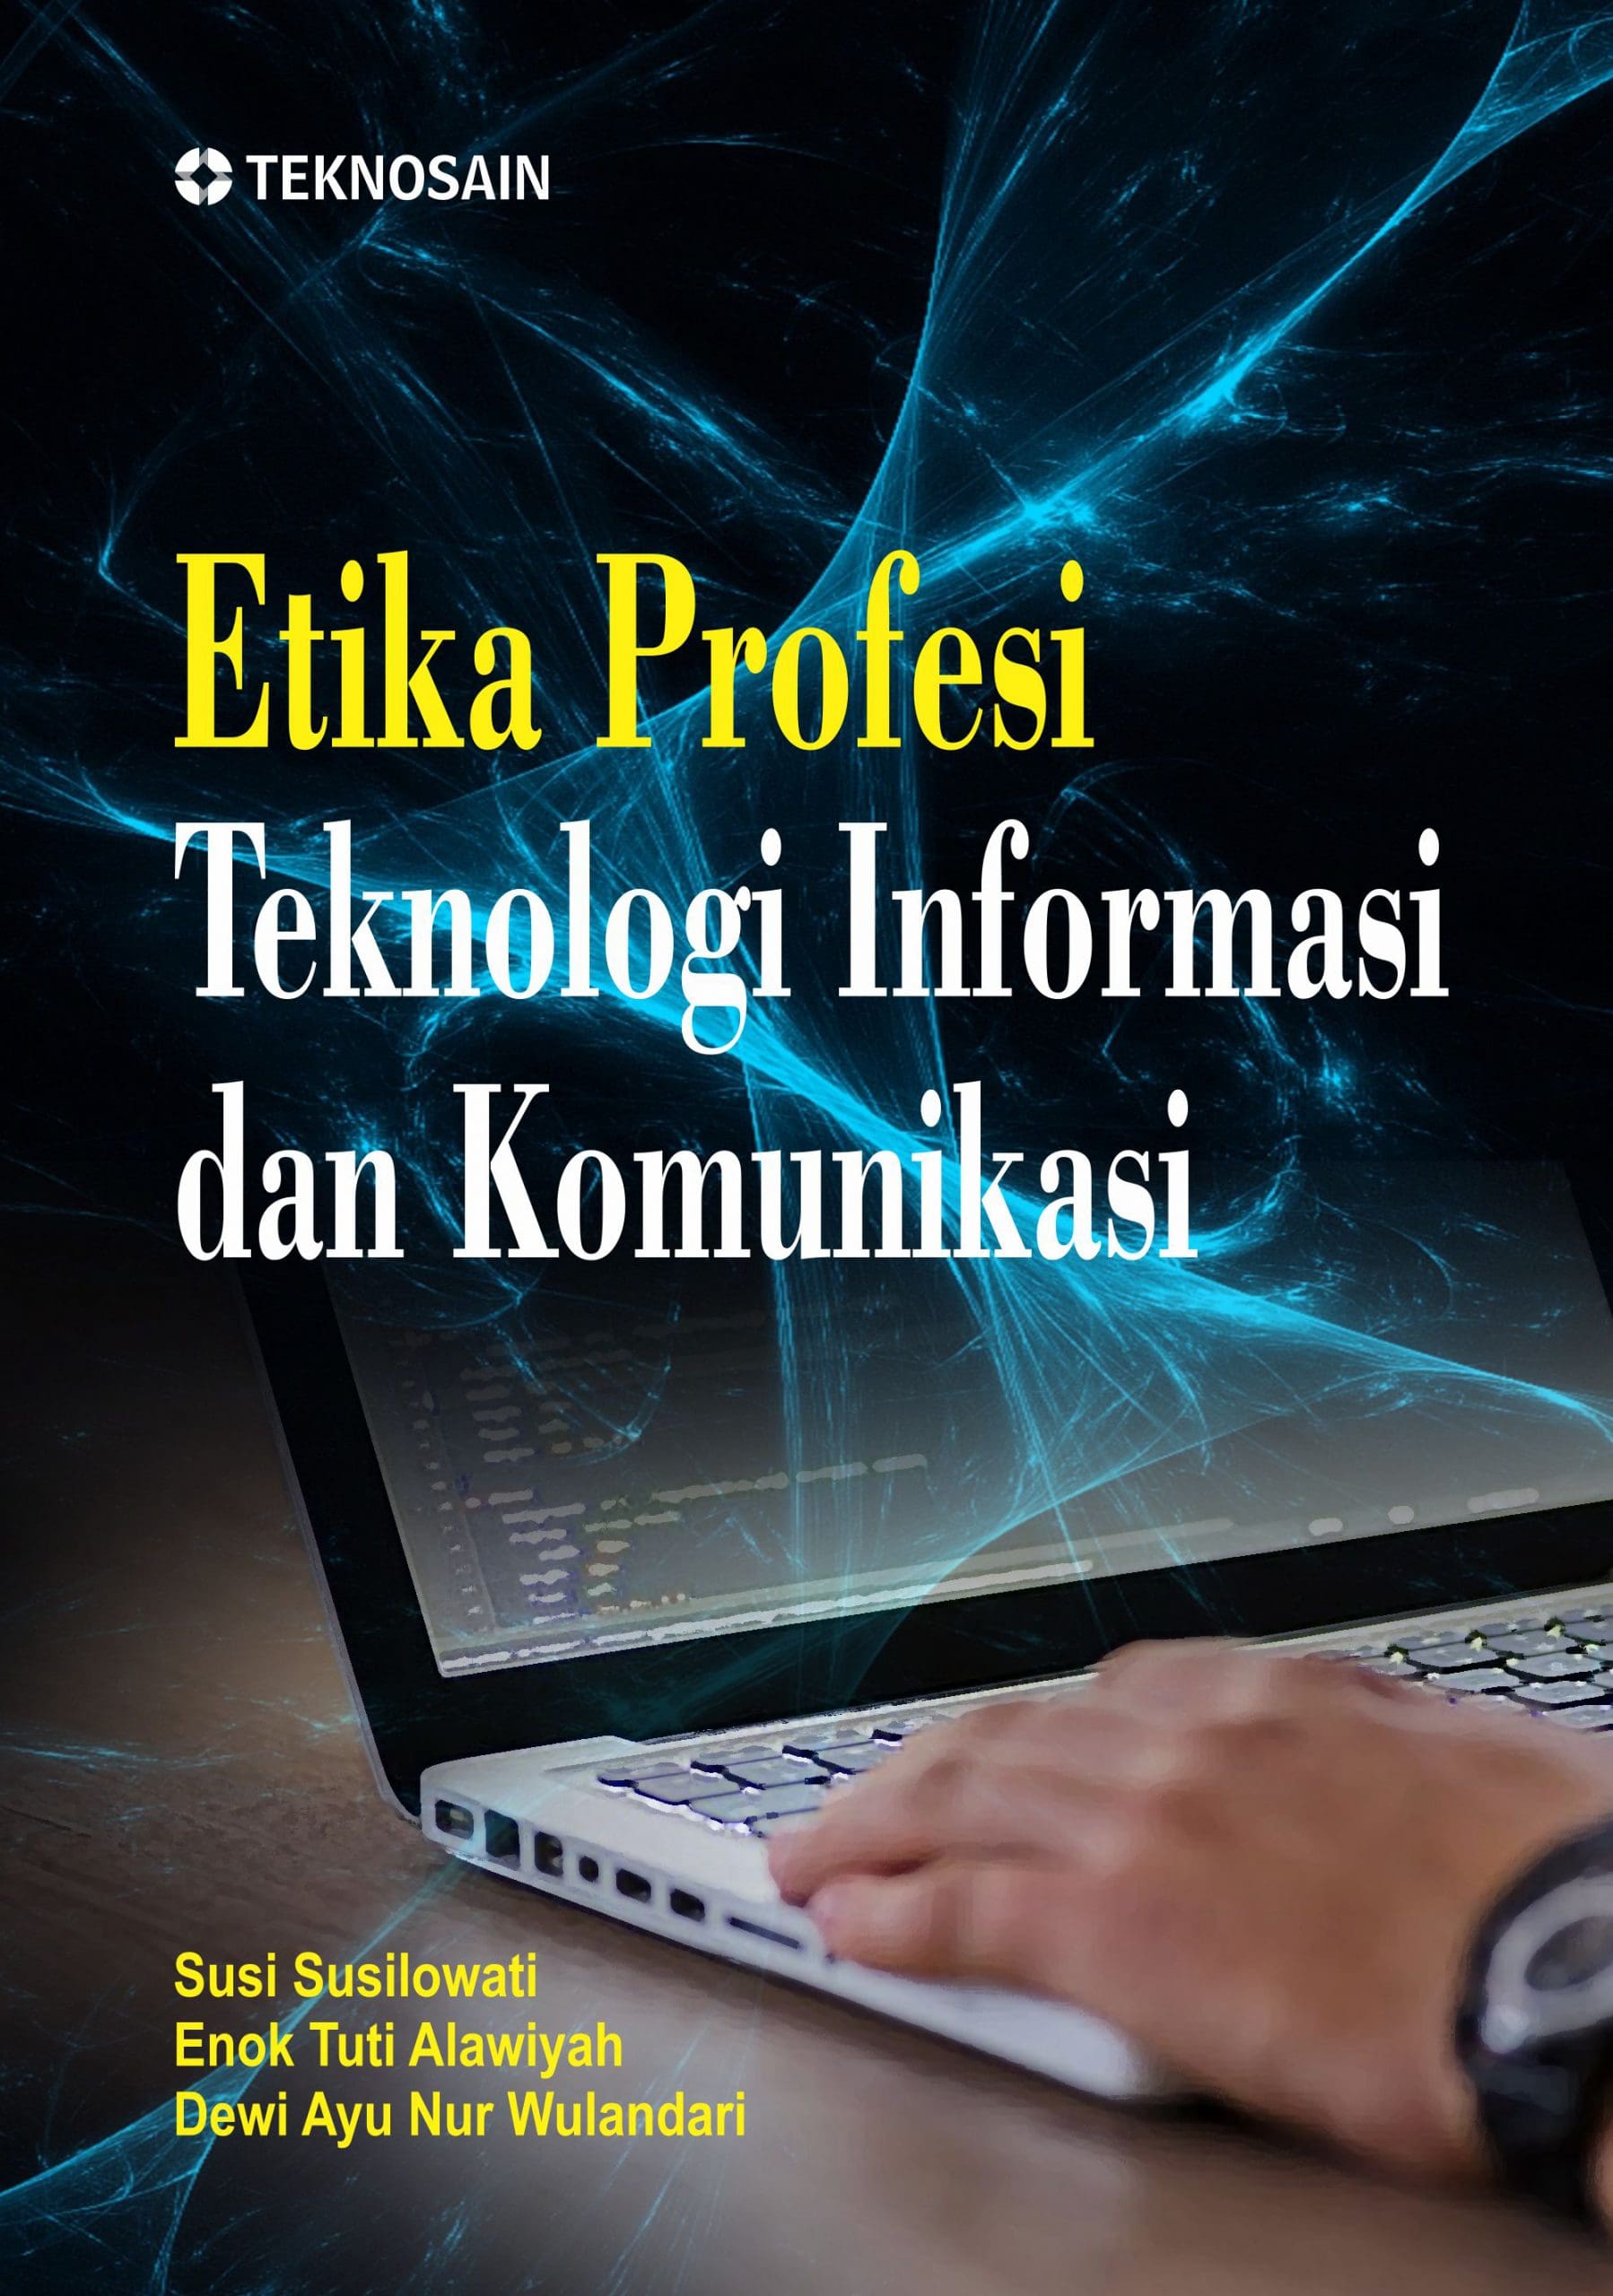 Etika Profesi Teknologi Informasi dan Komunikasi